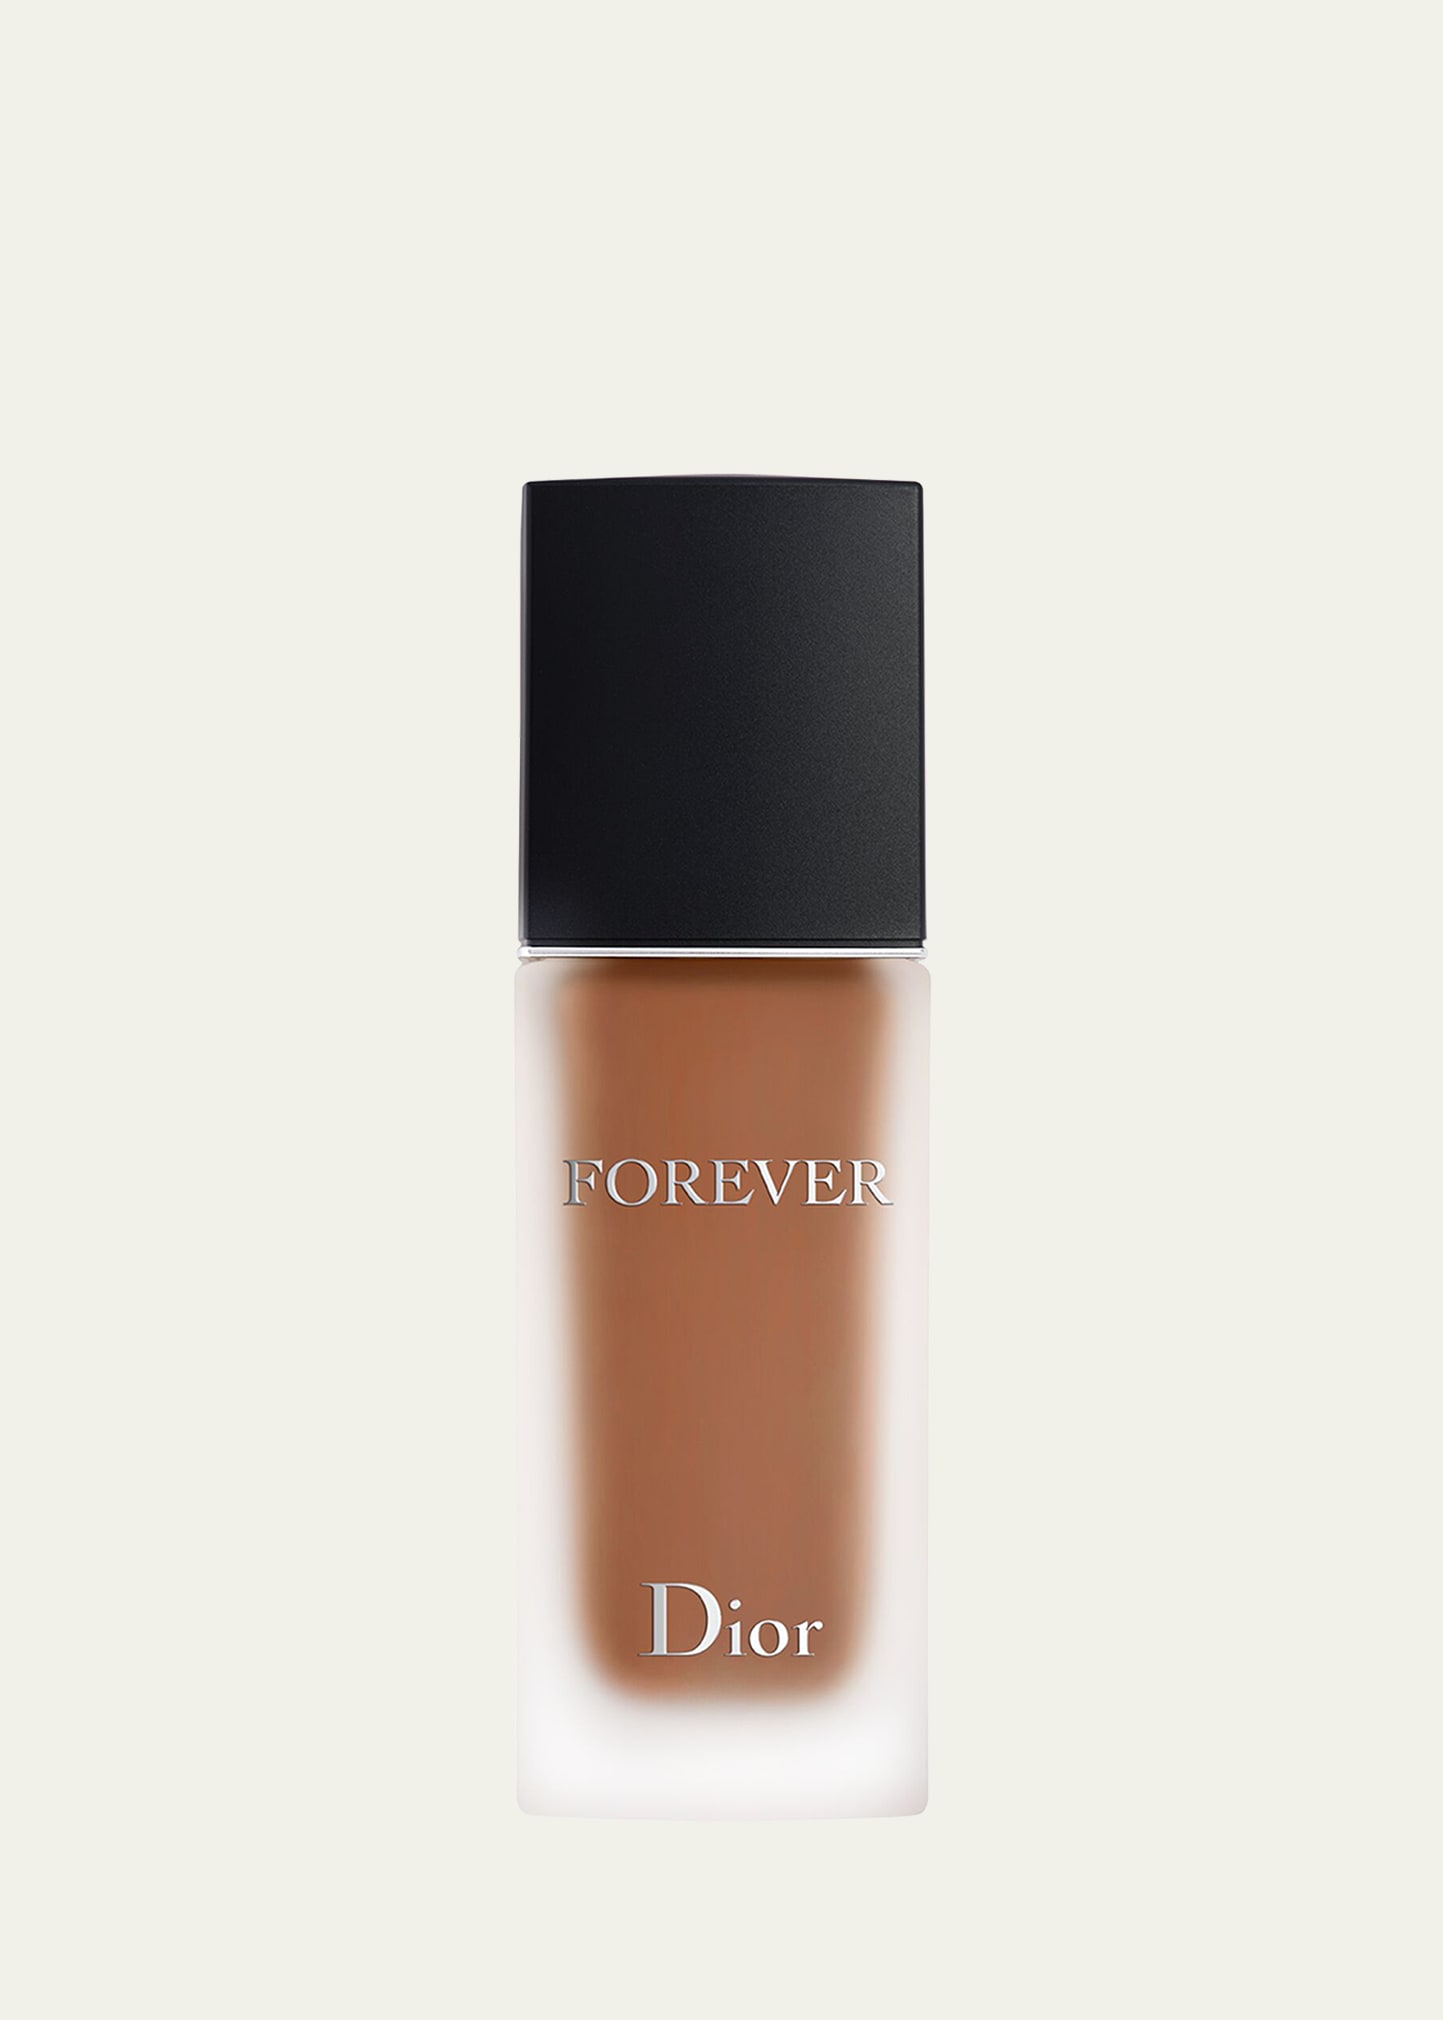 Dior 1 Oz. Forever Matte Skincare Foundation Spf 15 In 6.5 Neutral